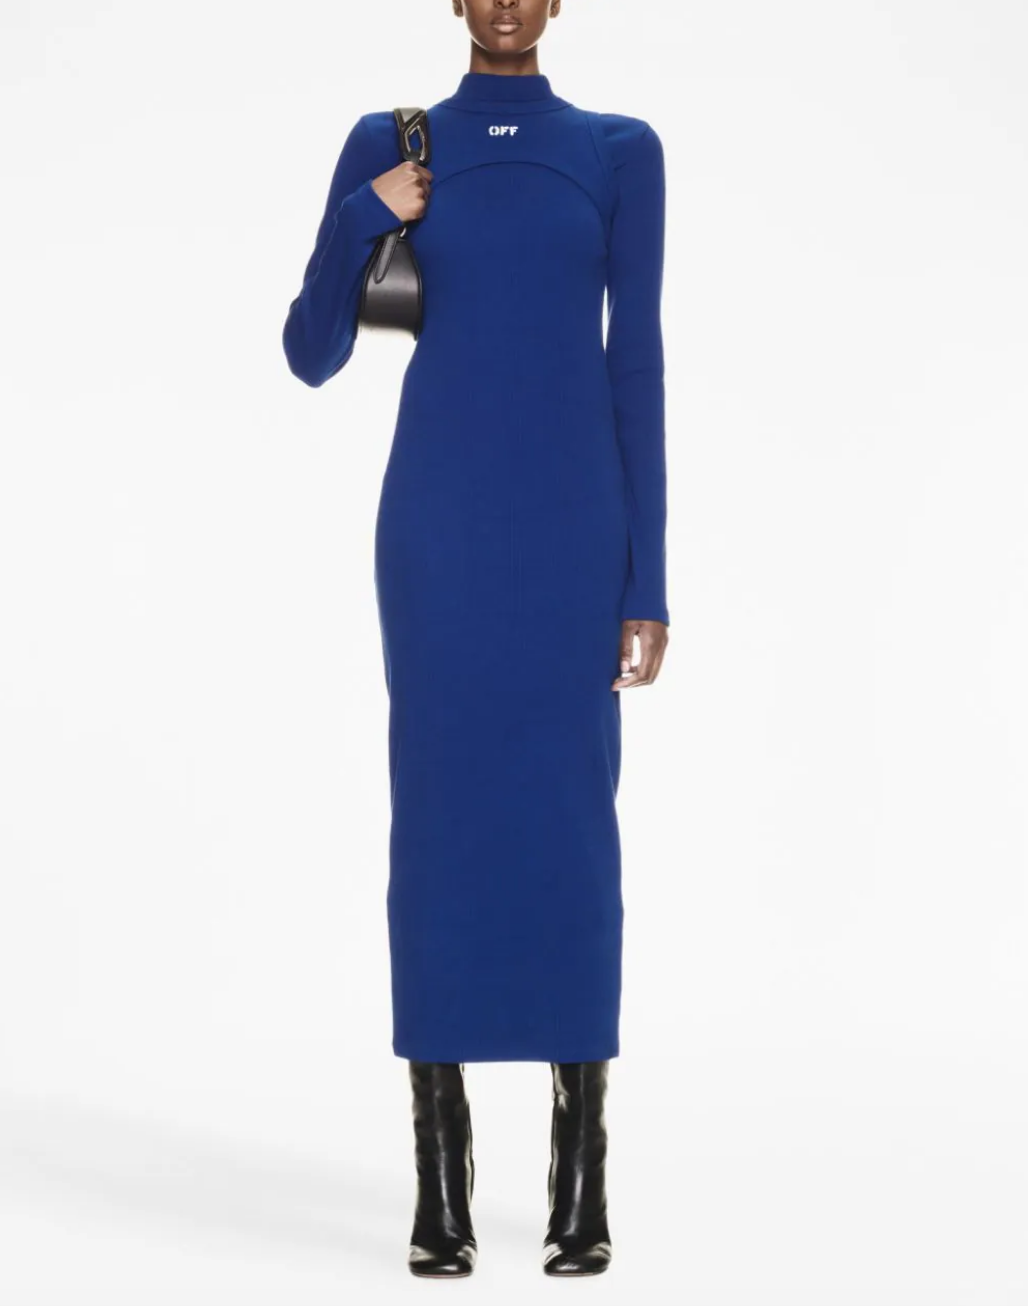 Ciara Miller's Blue Knit Long Sleeve Dress